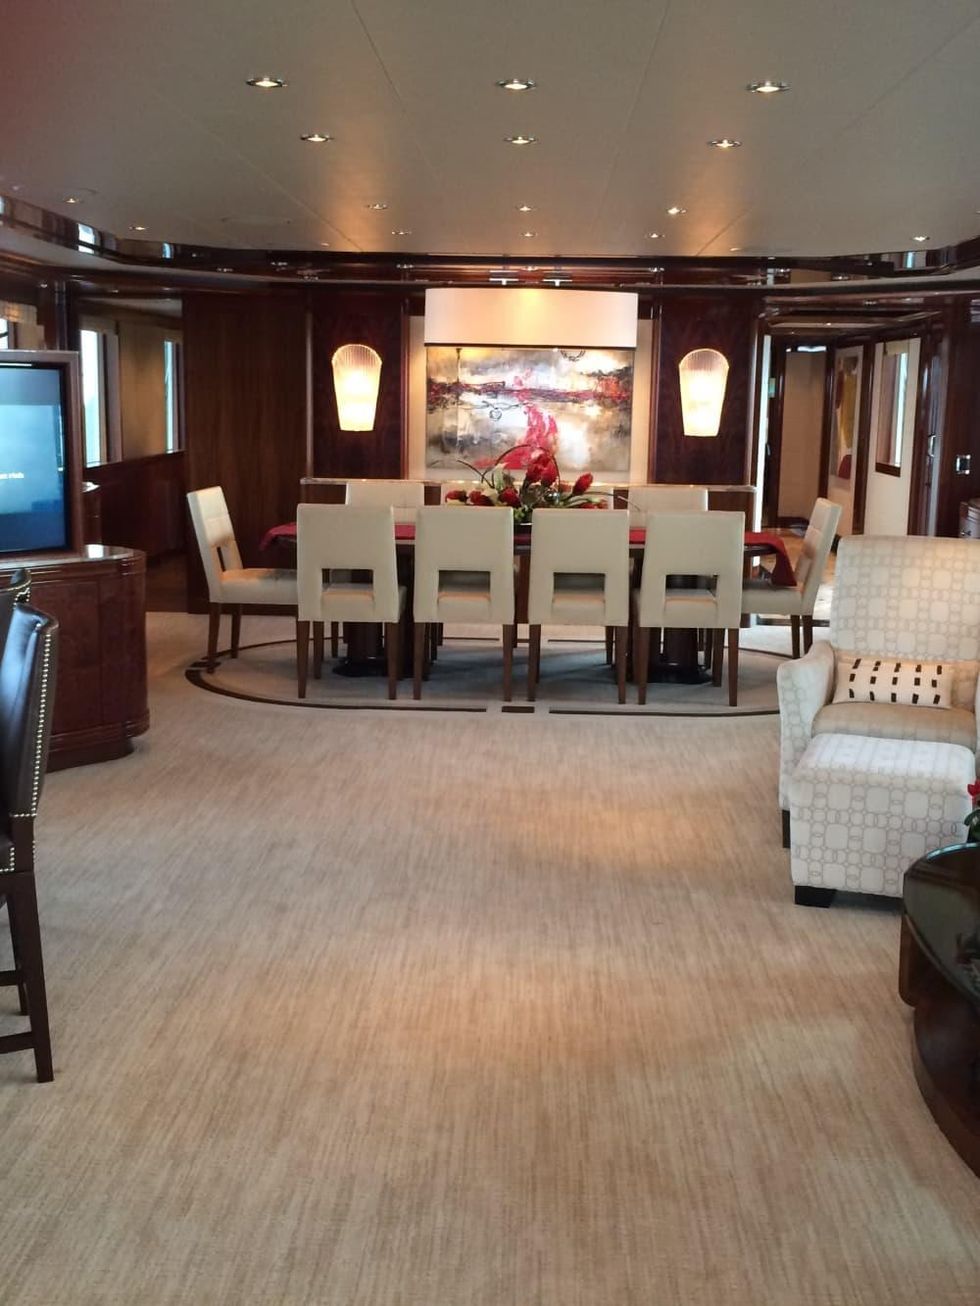 Tilman Fertitta yacht interior in Biloxi May 2014